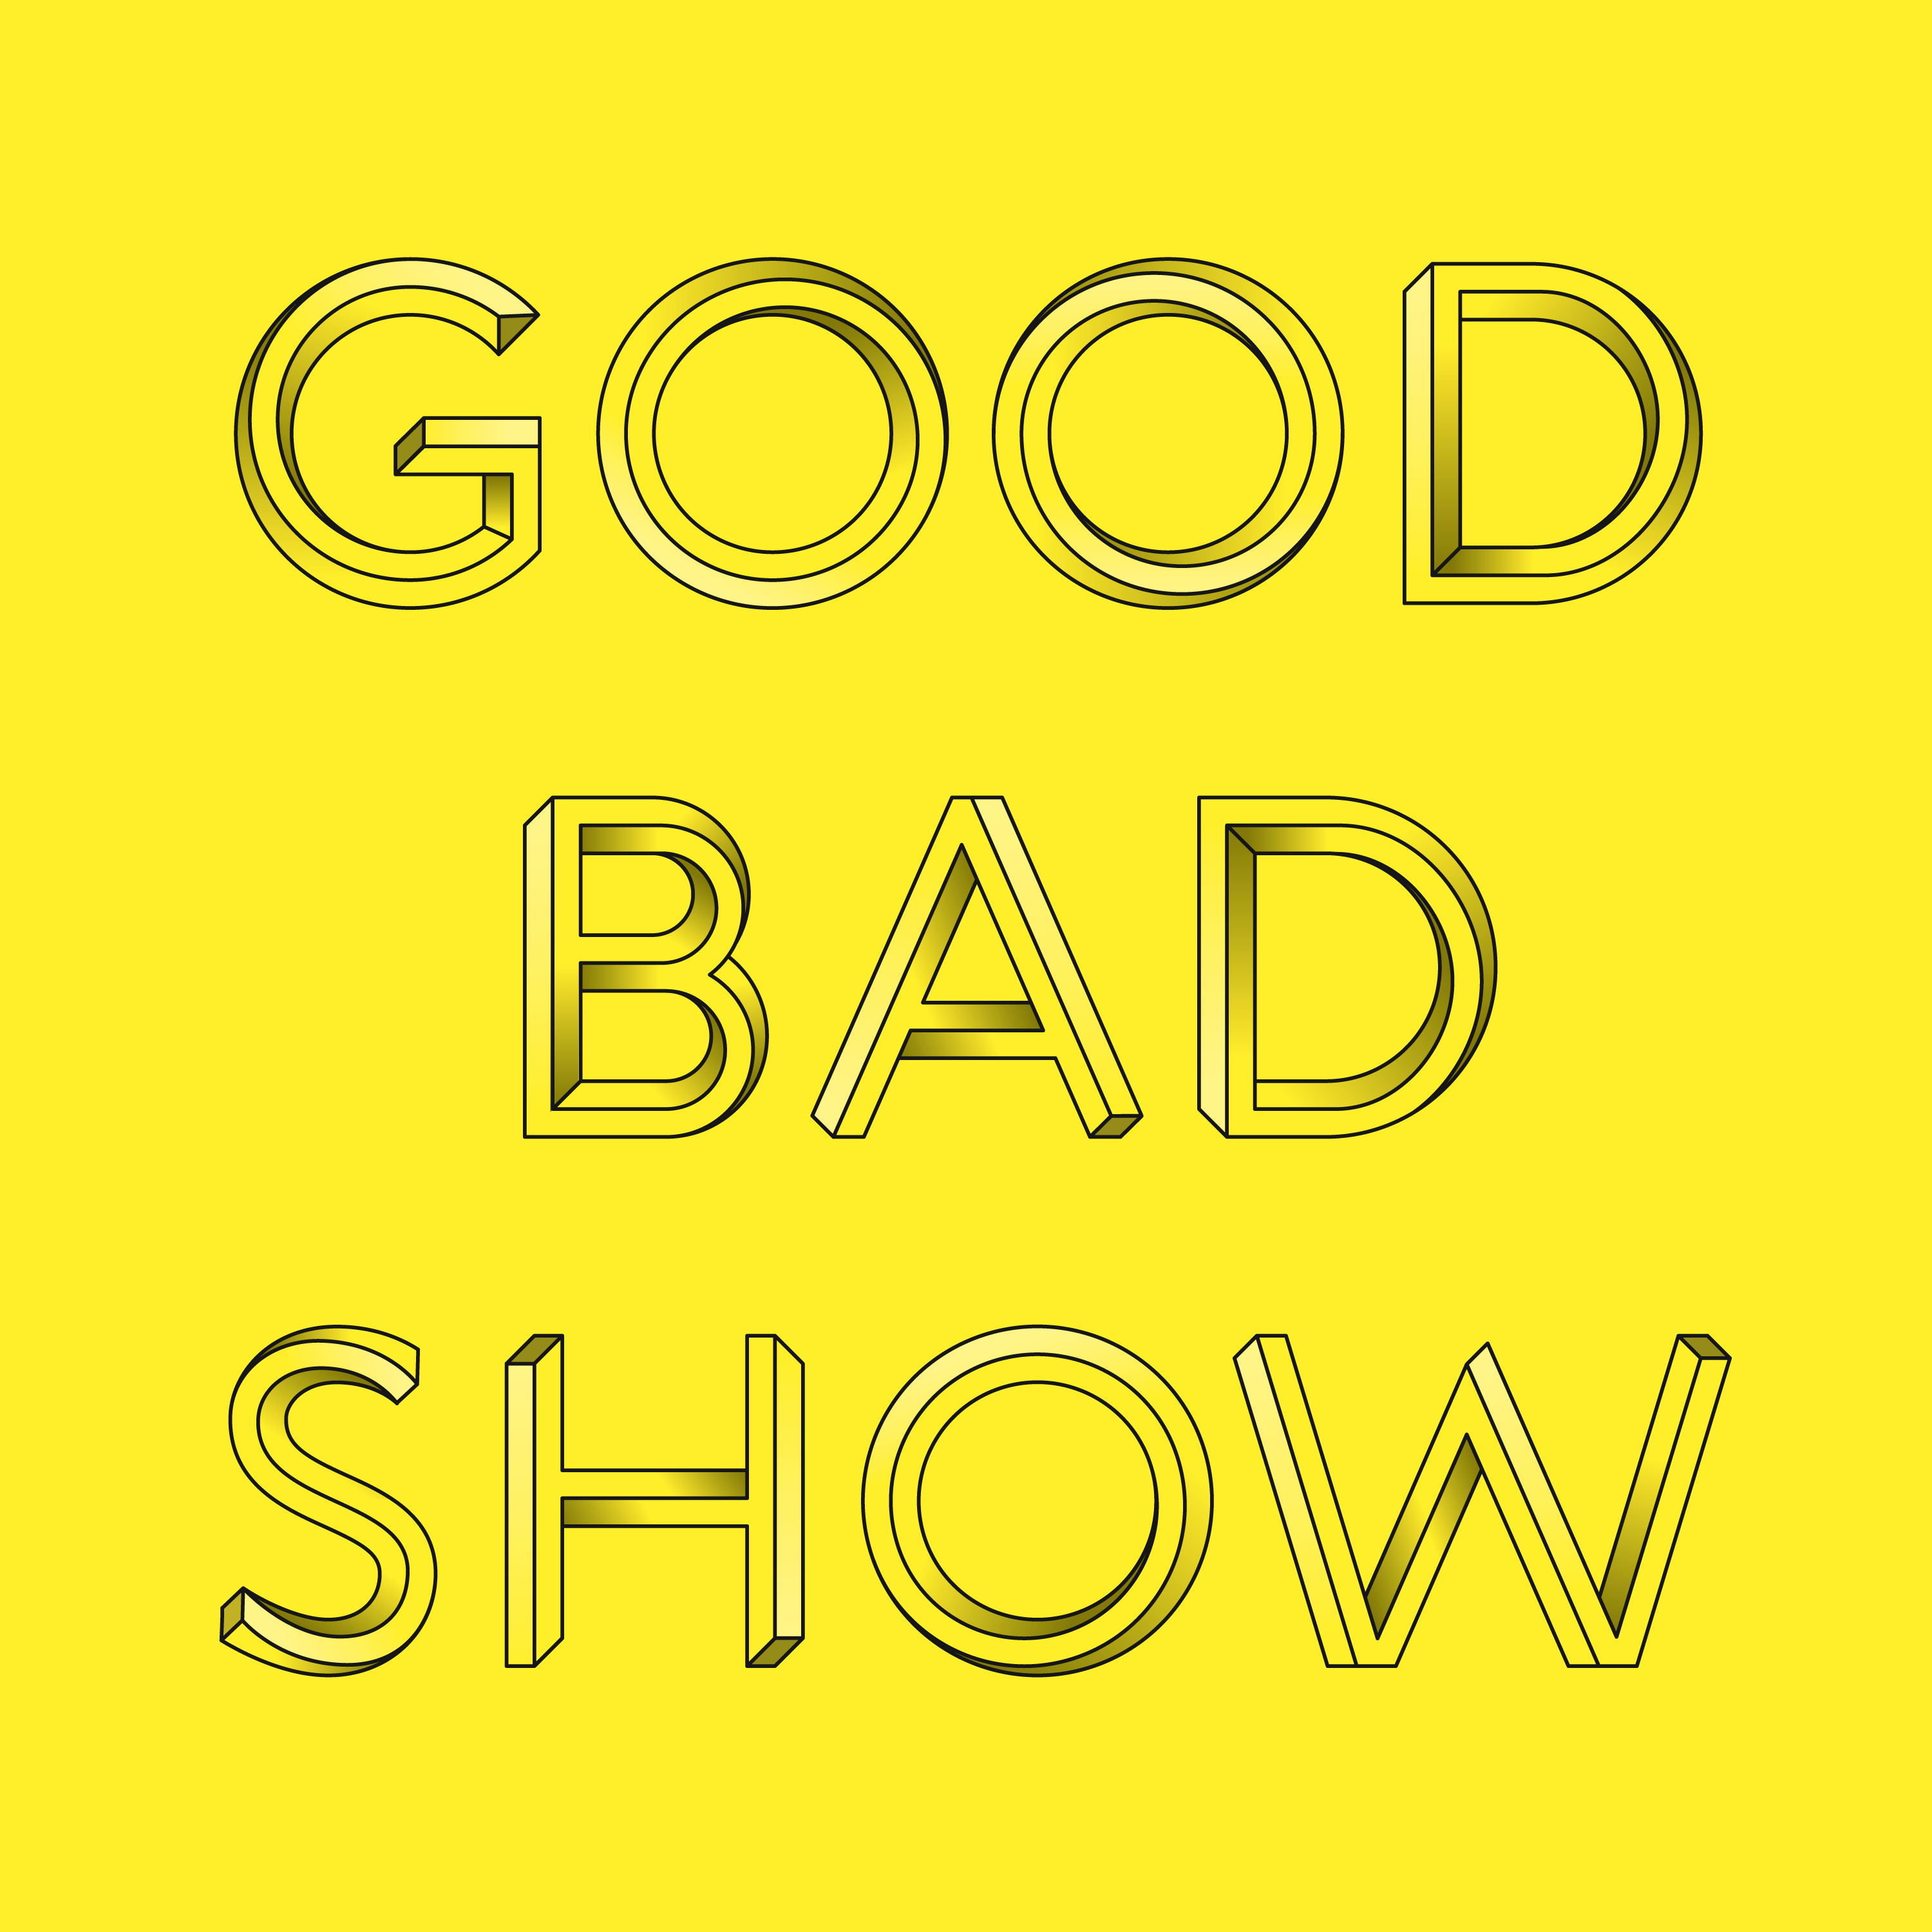 Good Bad Show